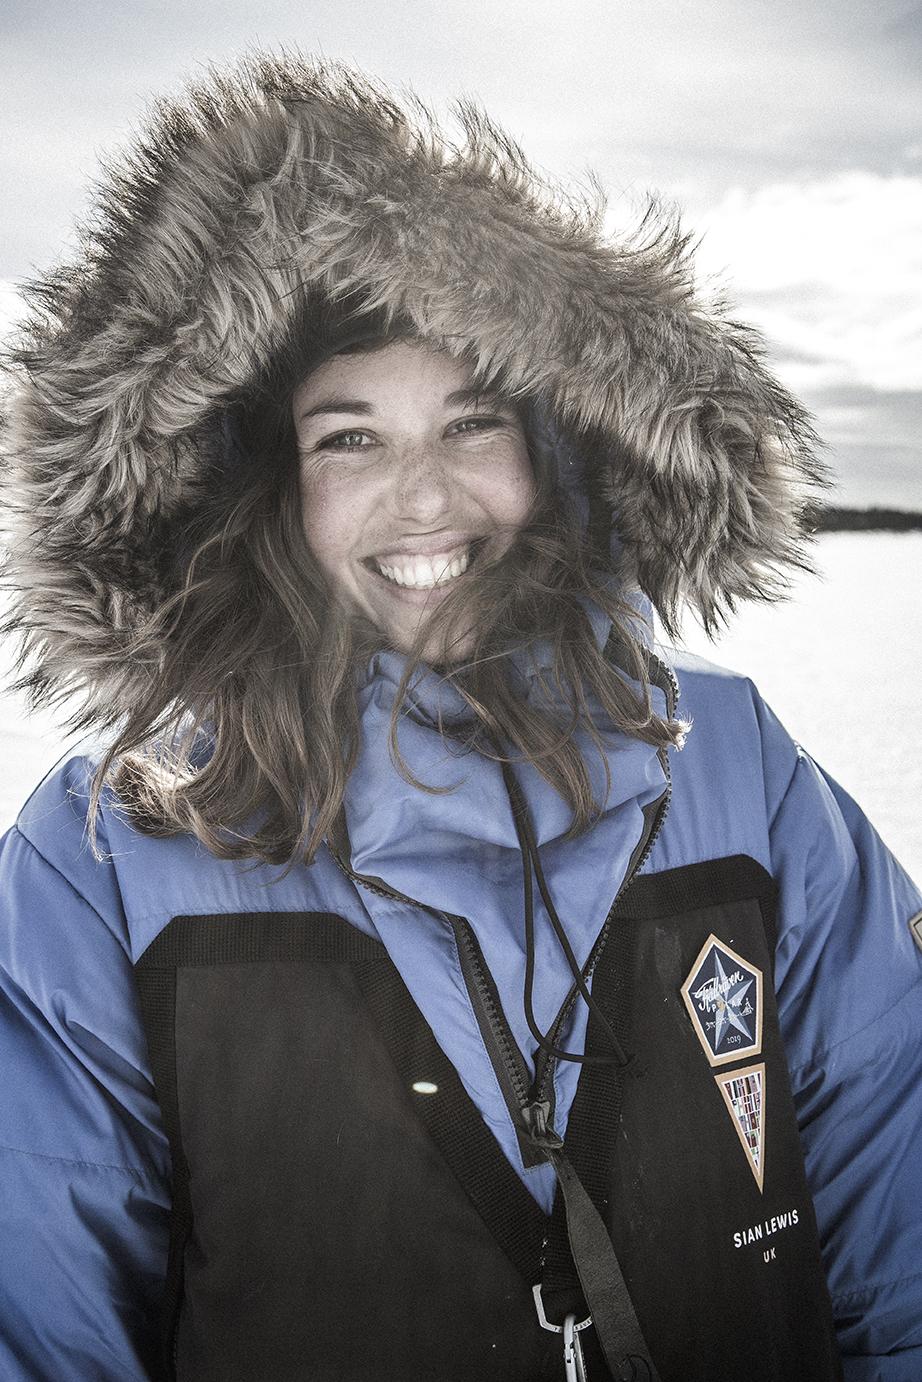 Fjällräven Polar 2019 Sian Lewis story of an Arctic adventure